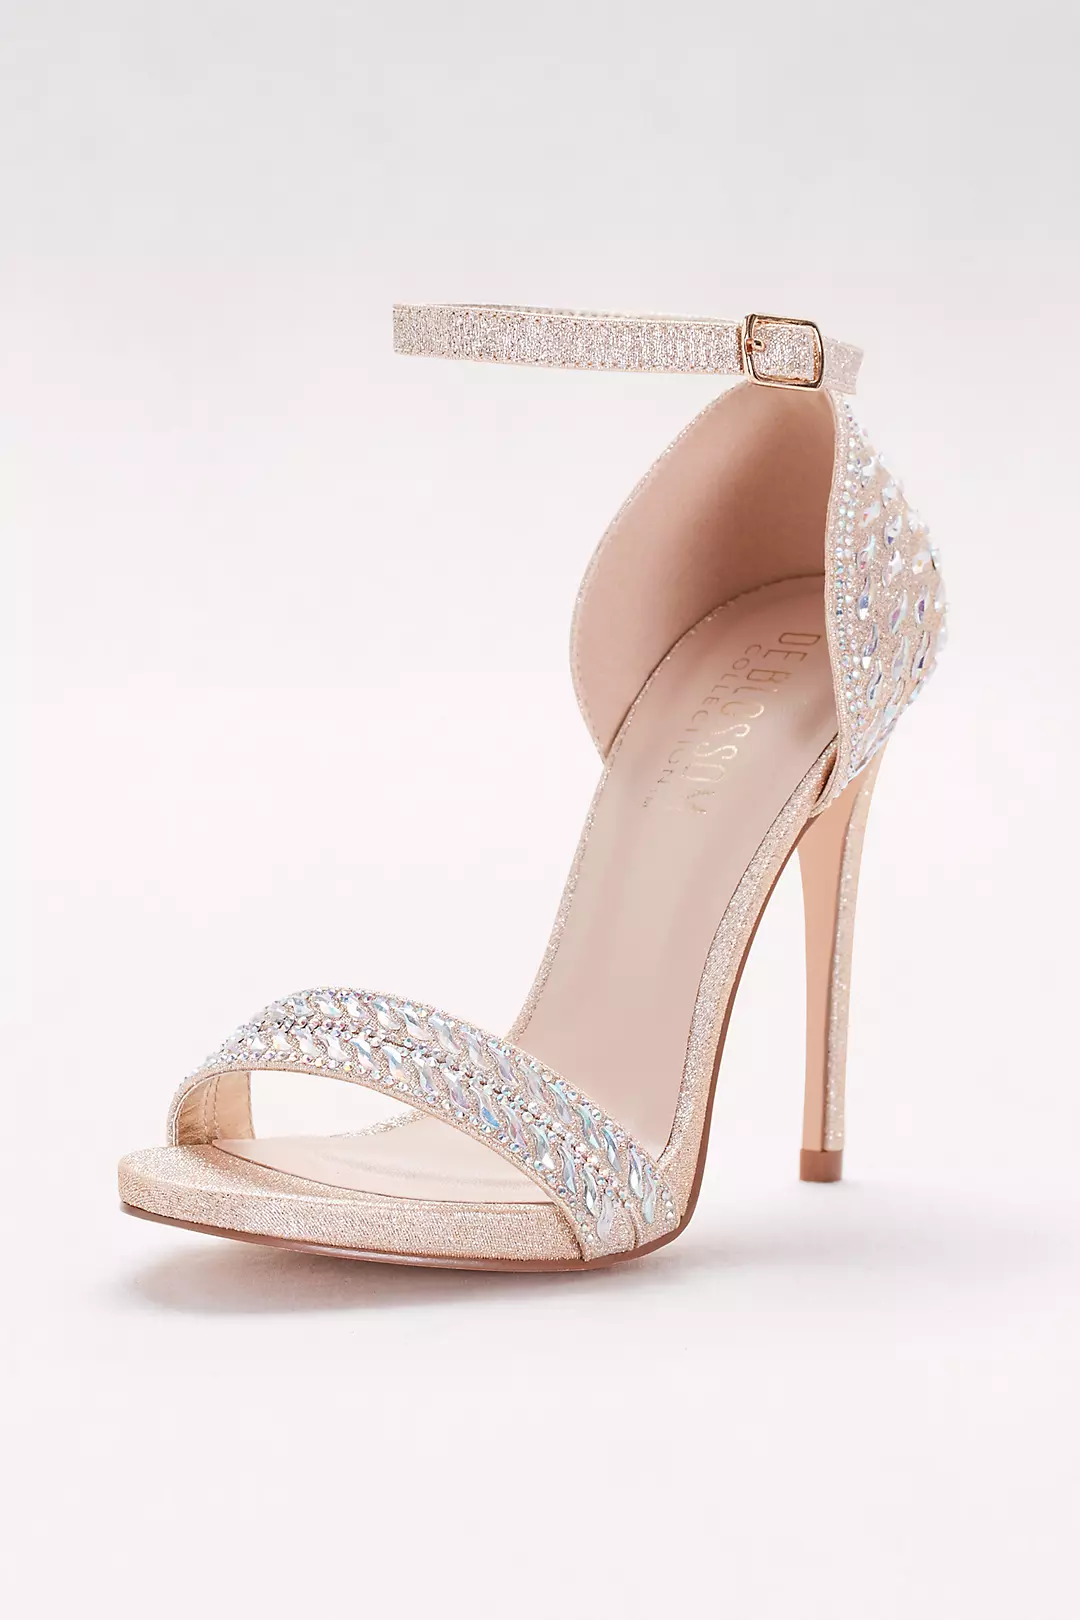 Metallic Ankle-Strap Sandals with Iridescent Gems | David's Bridal